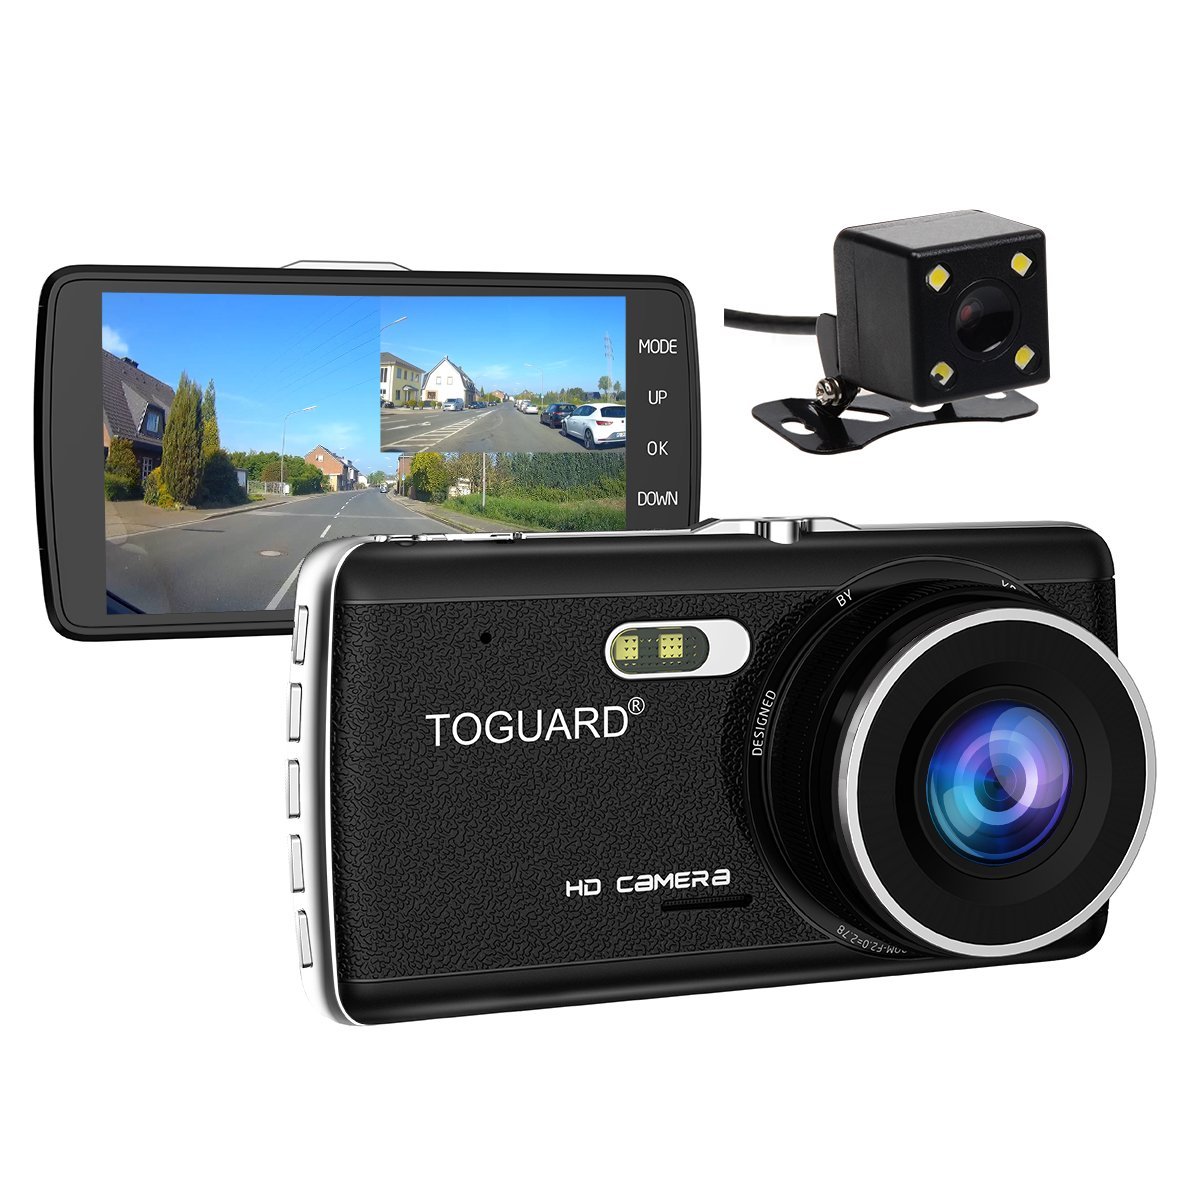 TOGUARD Dual Lens Dash Cam front and rear recording ATST, Night Vision,4.0'' IPS Screen,HD 1080P Car Dash Camera, Rearview Backup Camera,170 Degree Wide Angle, WDR, Loop Recording, G-sensor, Parking monitor